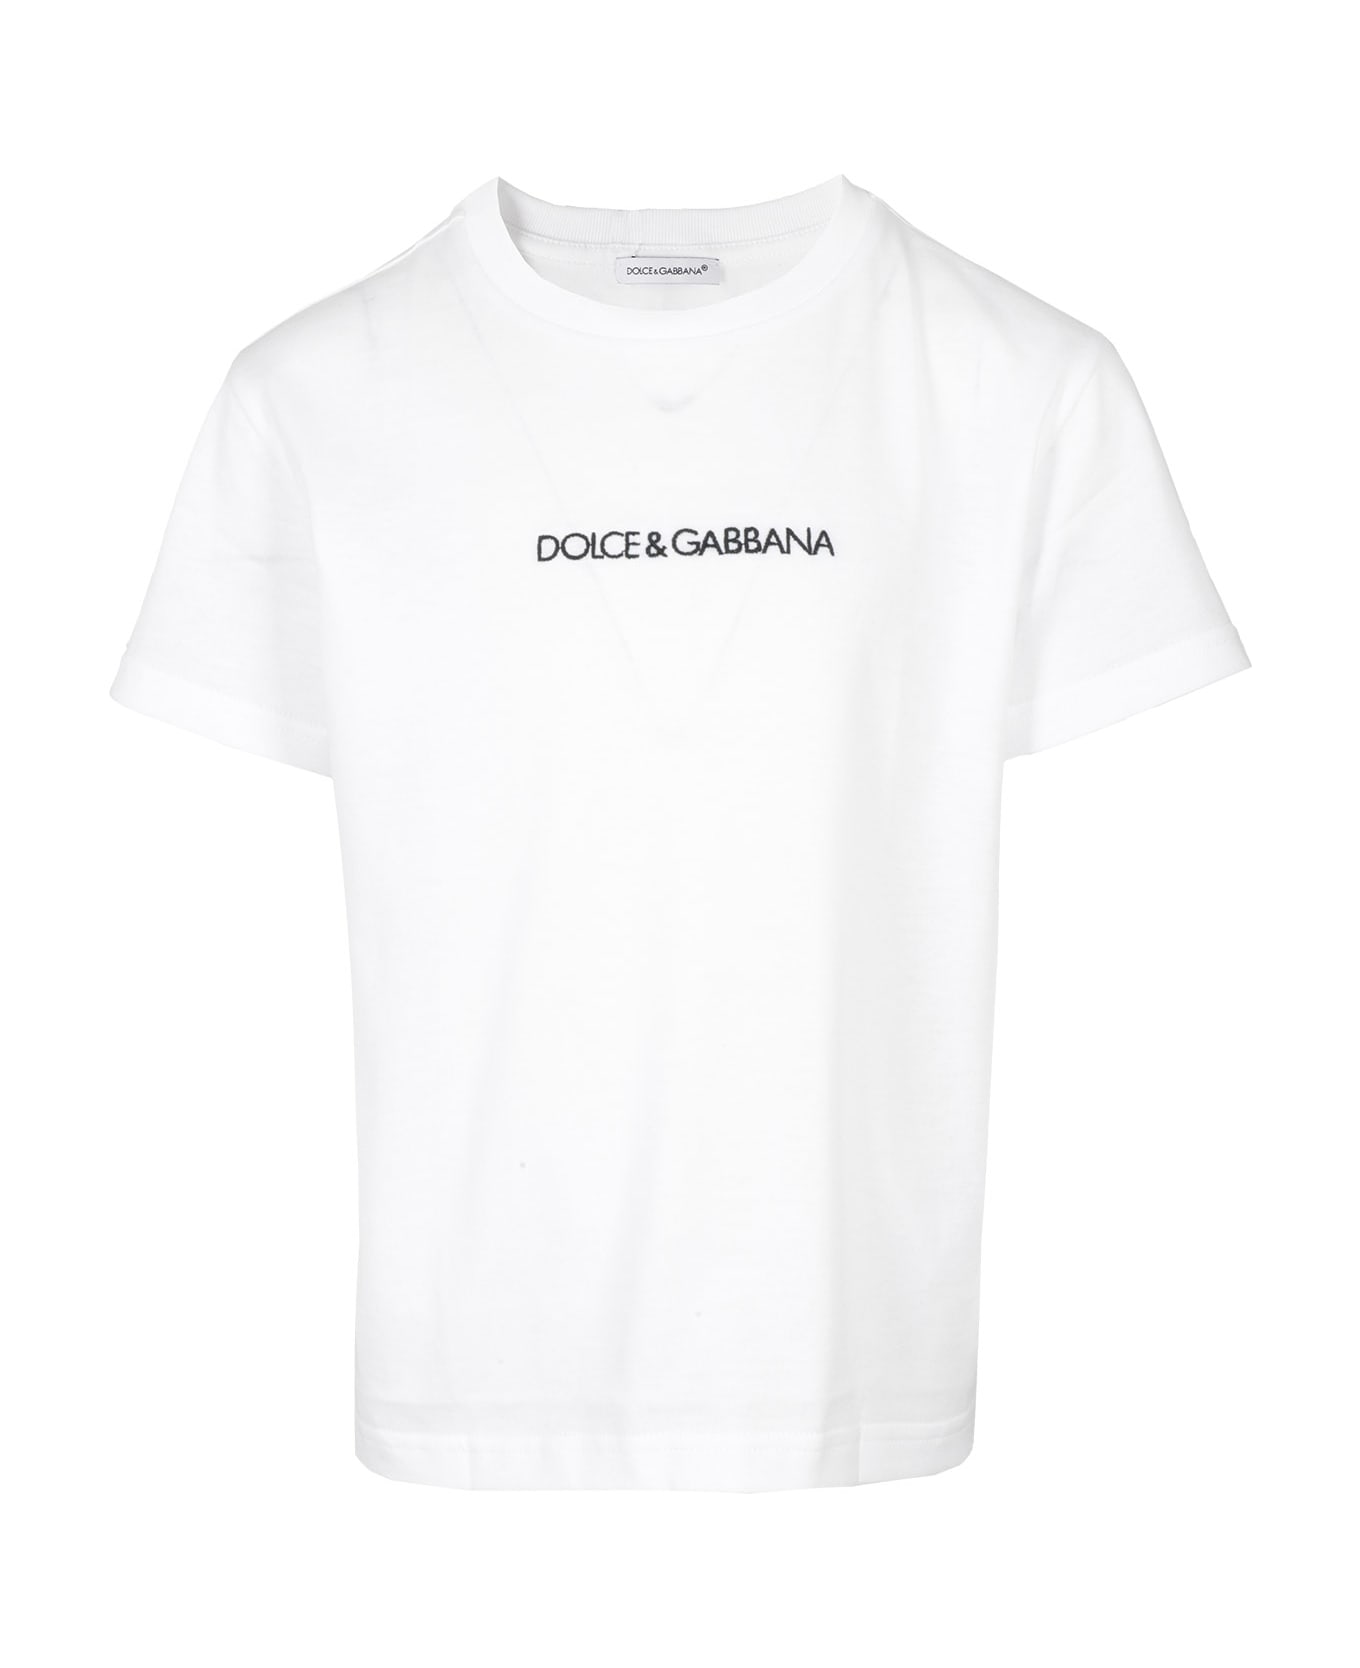 Dolce & Gabbana Tshirt Manica Corta - Bianco Ottico